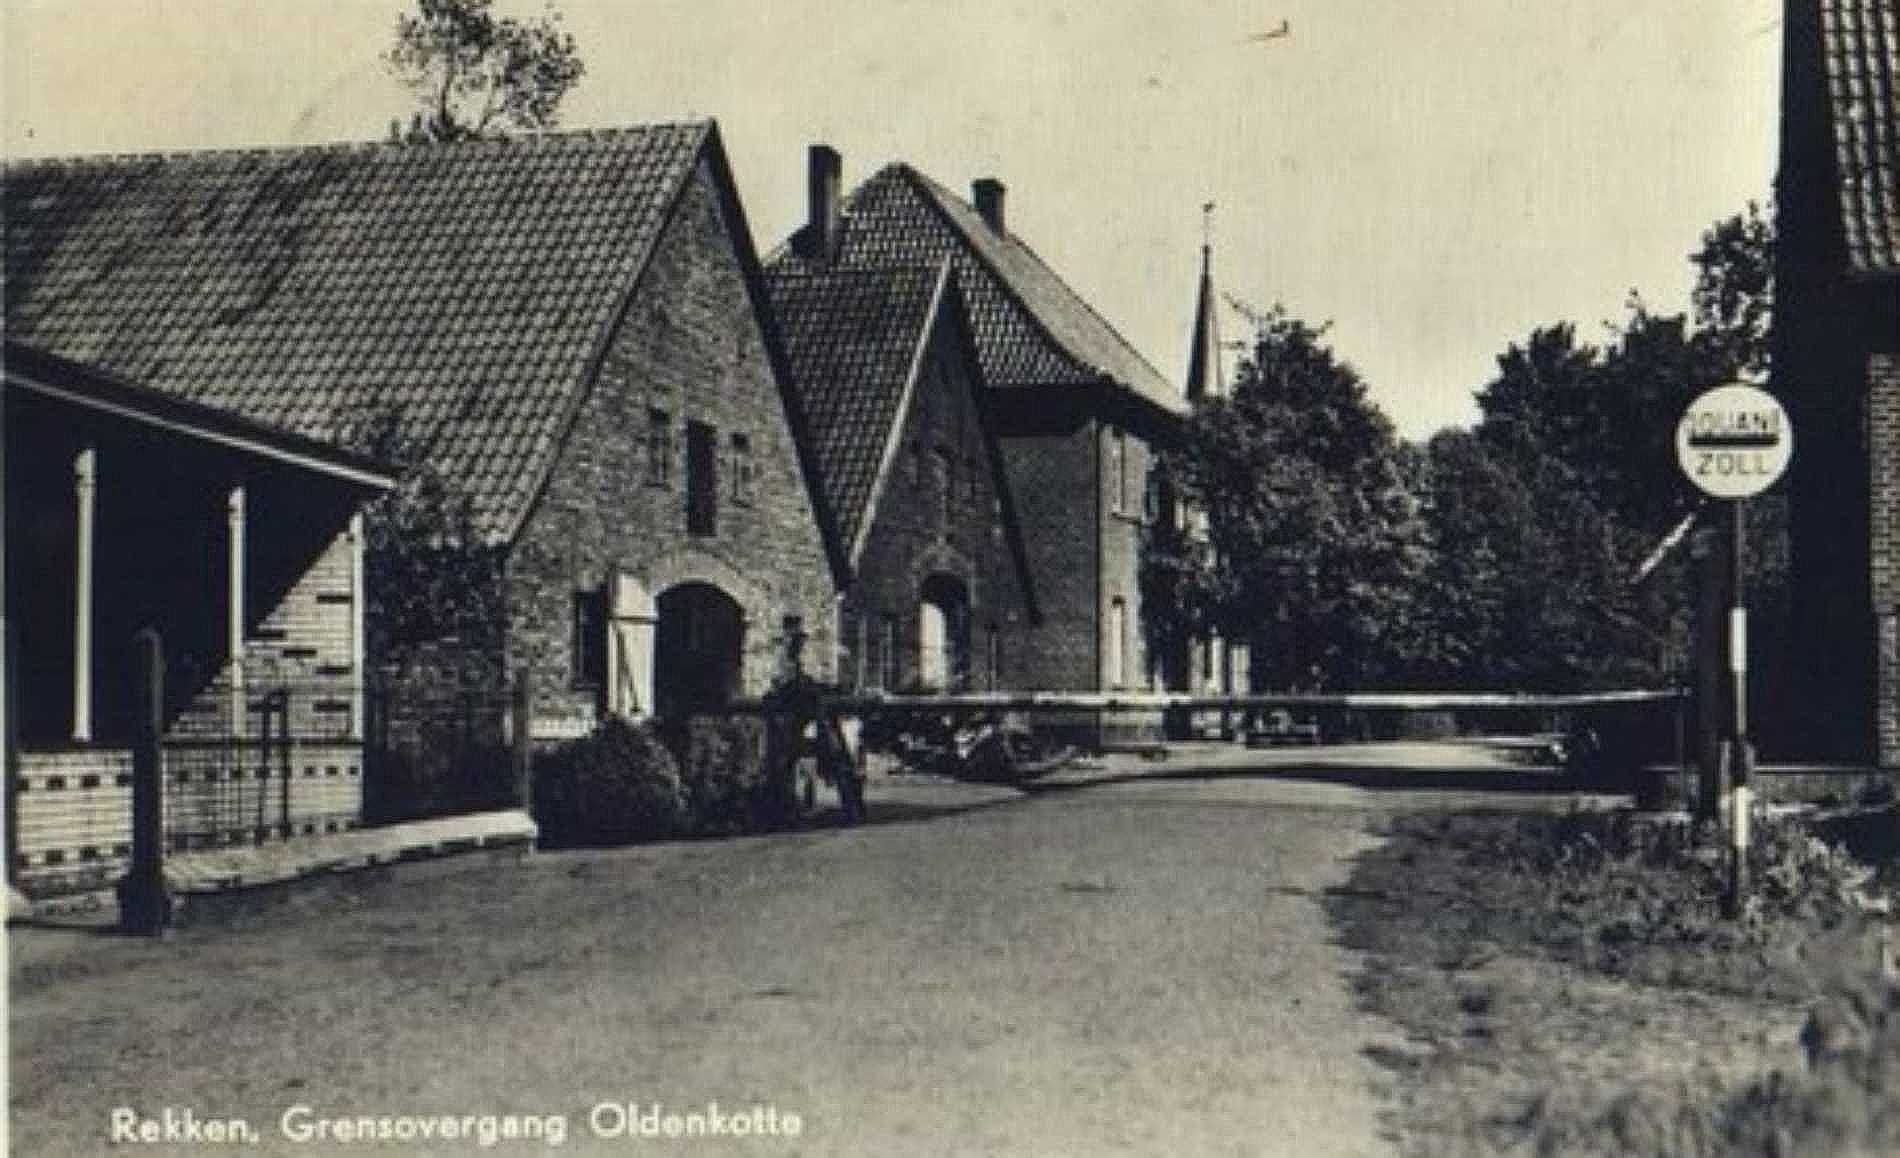 Grensovergang in Rekken ca. 1917